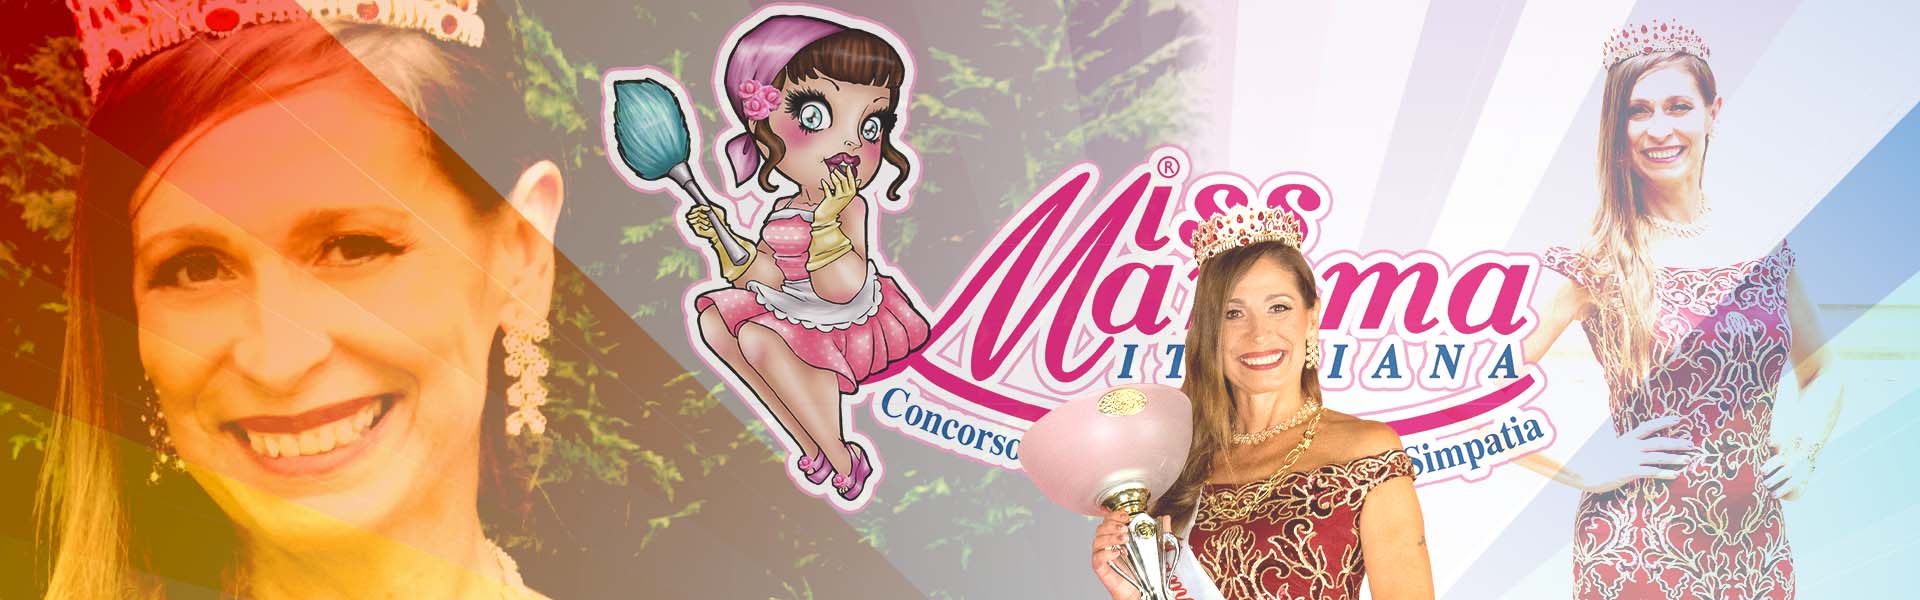 Miss-Mamma-Italiana-Gold-2021-banner-home2